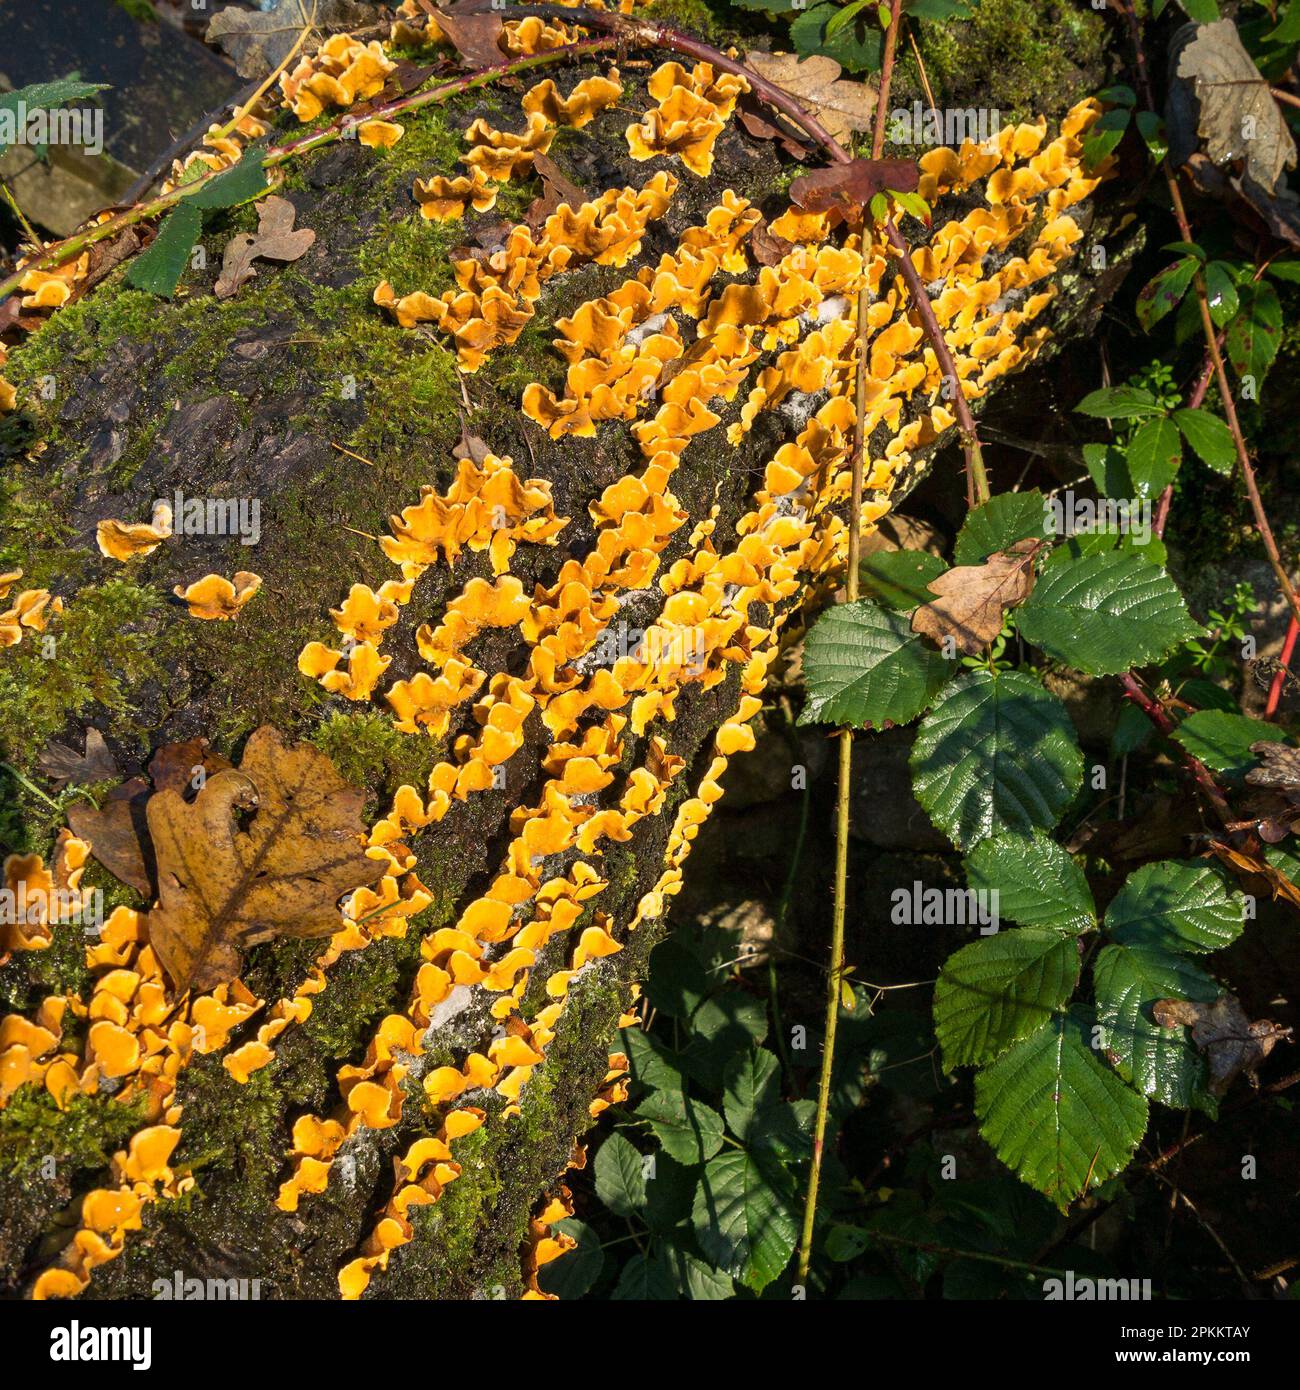 Hairy Curtain Crust (Stereum hirsutum) bracket fungus growing on dead tree trunk, Cumbria, England, UK Stock Photo